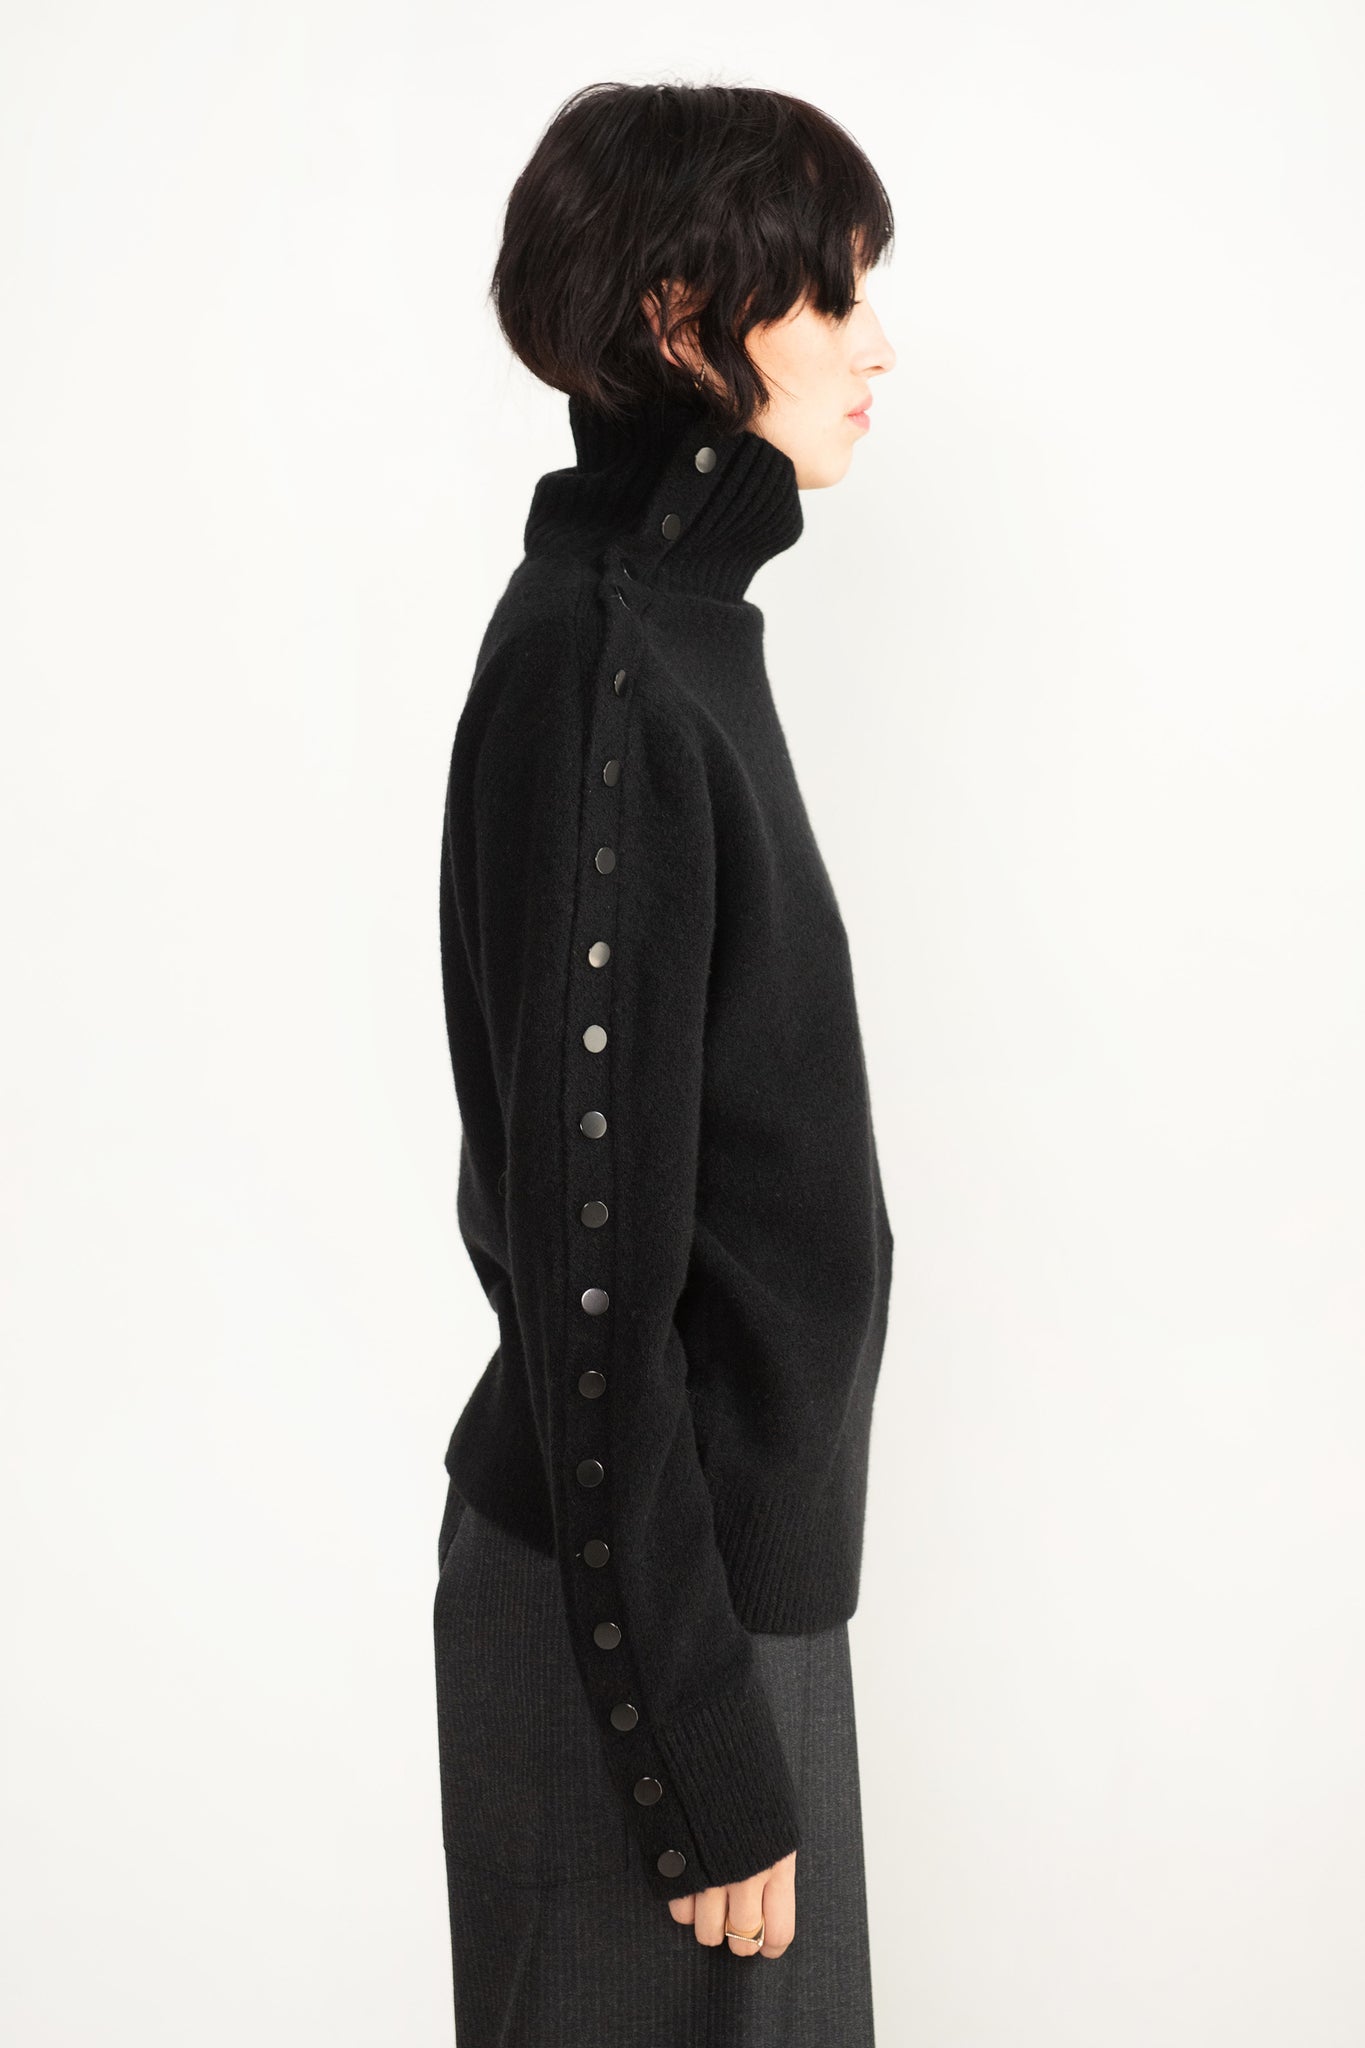 proenza schouler - Lofty Eco Cashmere Button Sweater, Black